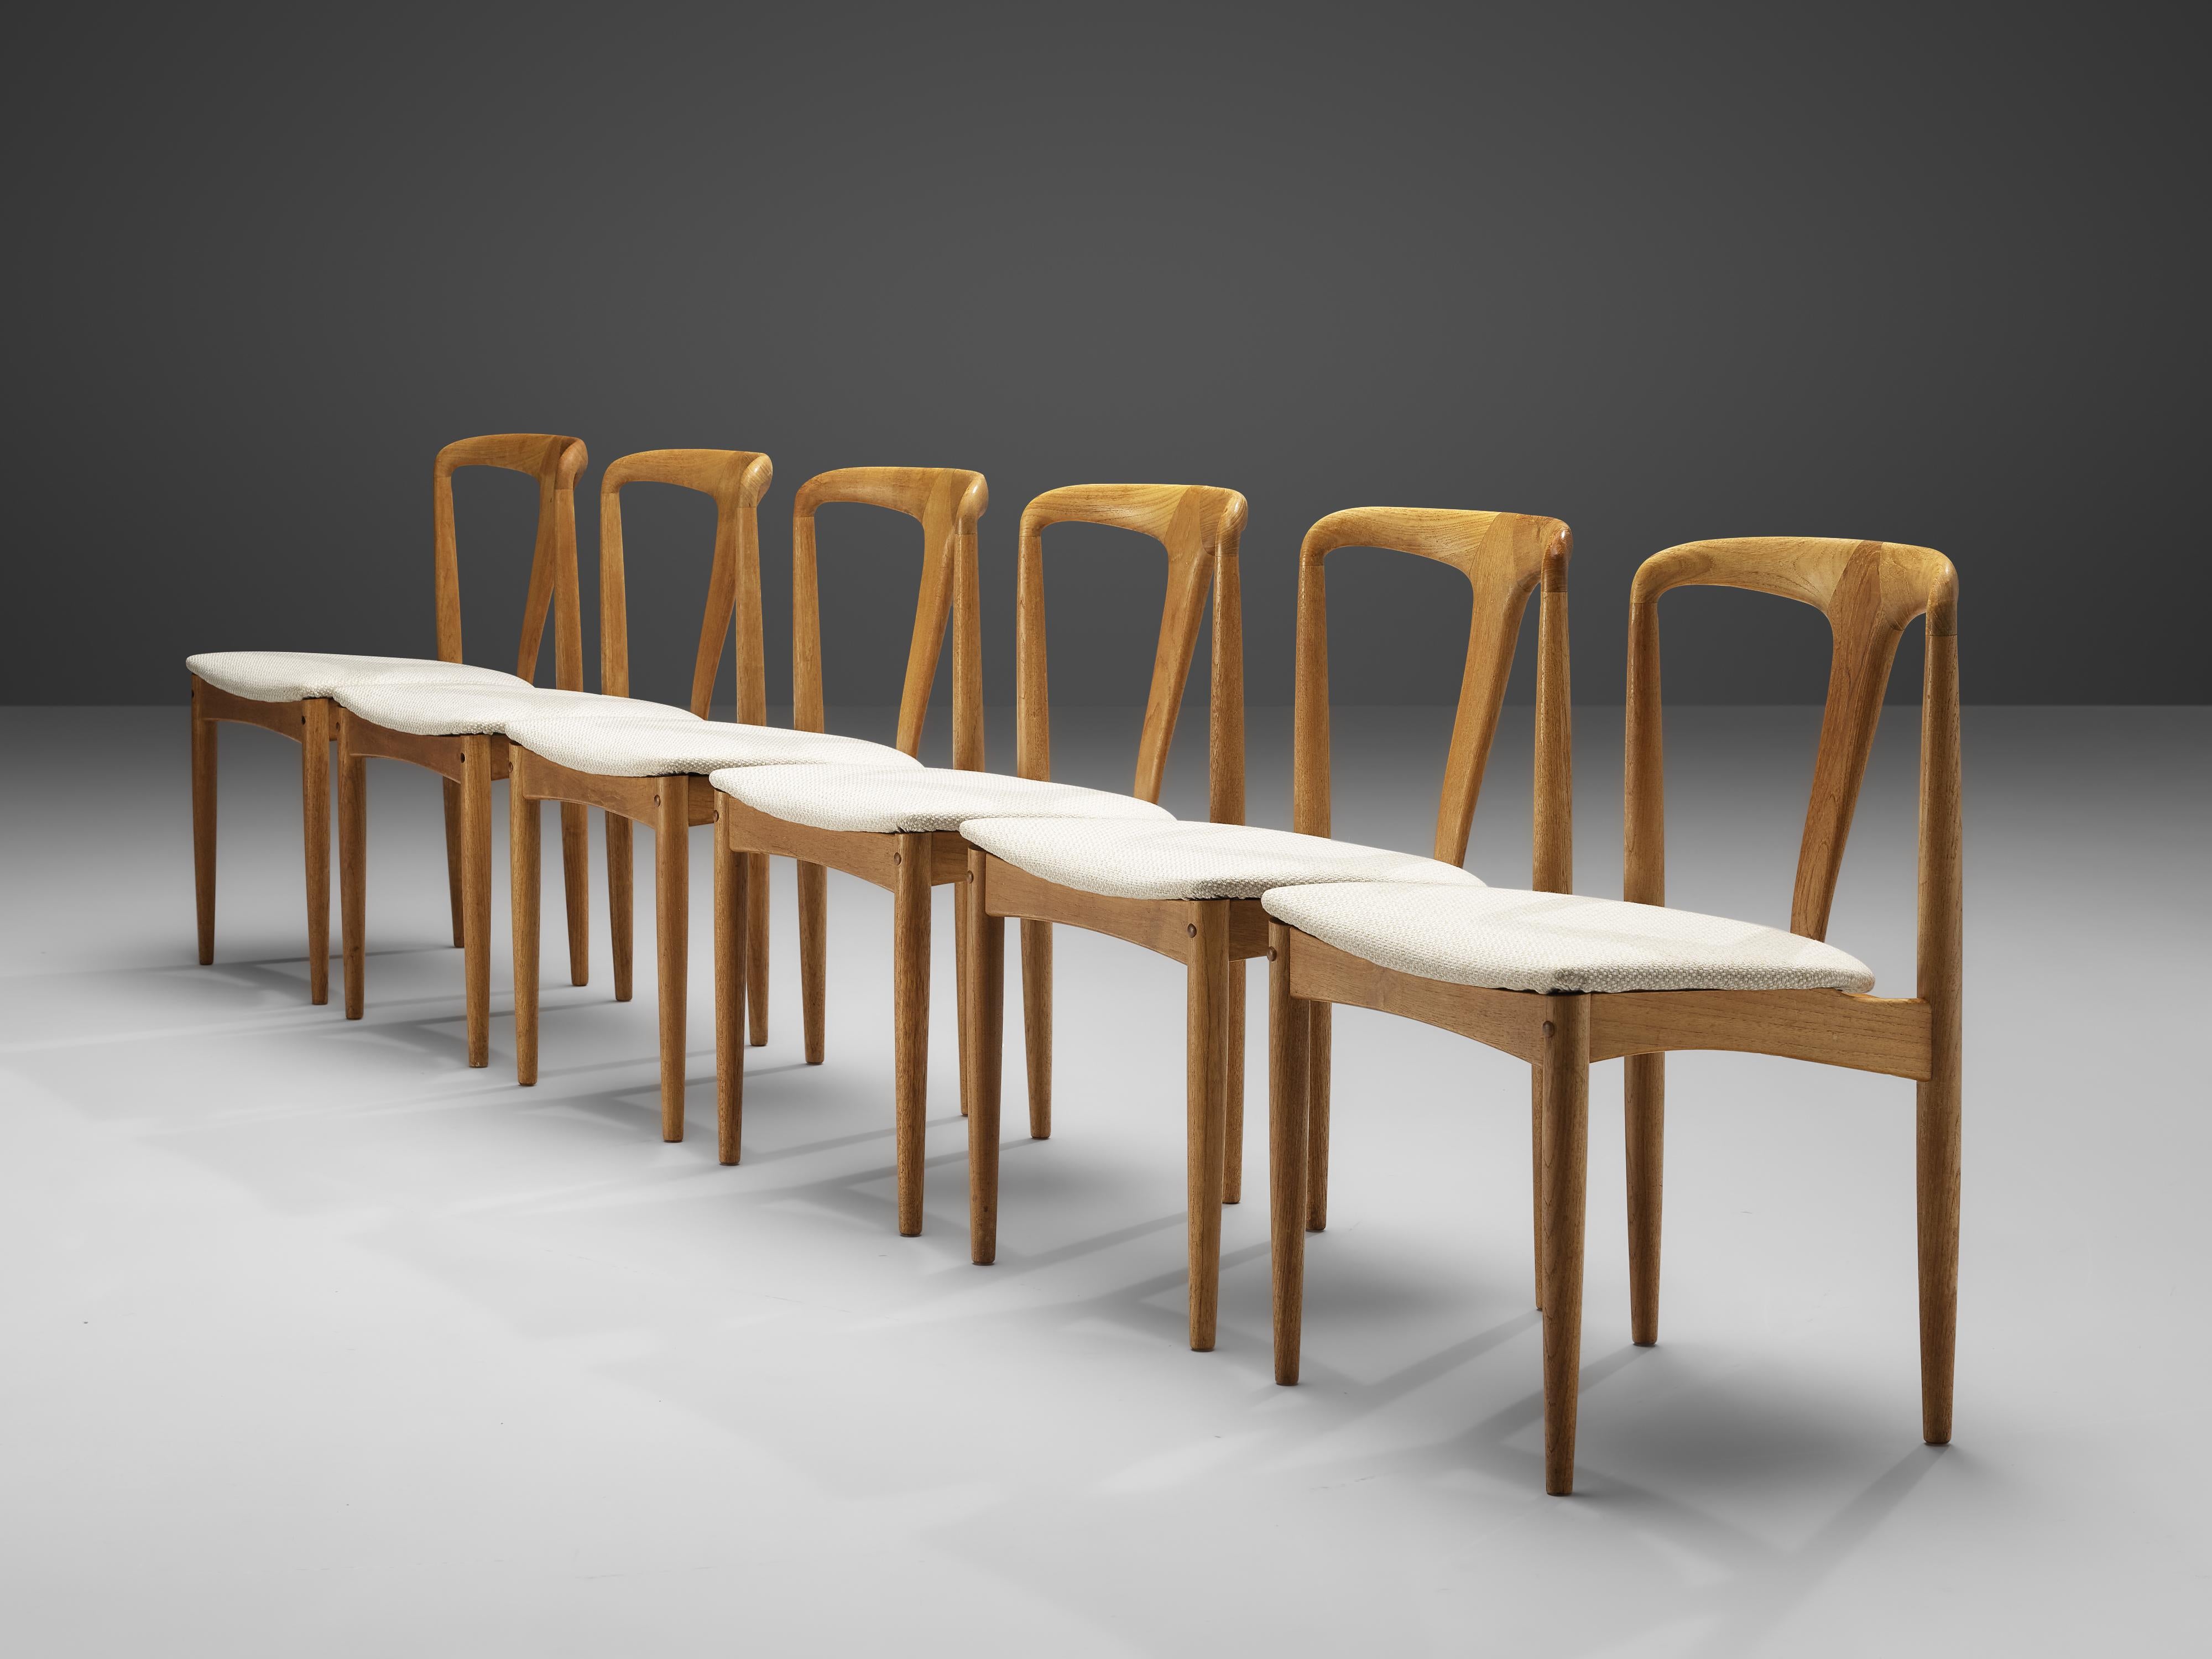 Johannes Andersen for Uldum Møbelfabrik, set of six dining chairs ‘Juliane’, teak, fabric, Denmark, 1960s

This set of six dining chairs is designed by Danish designer Johannes Andersen and produced by Uldum Møbelfabrik in Denmark. The set is